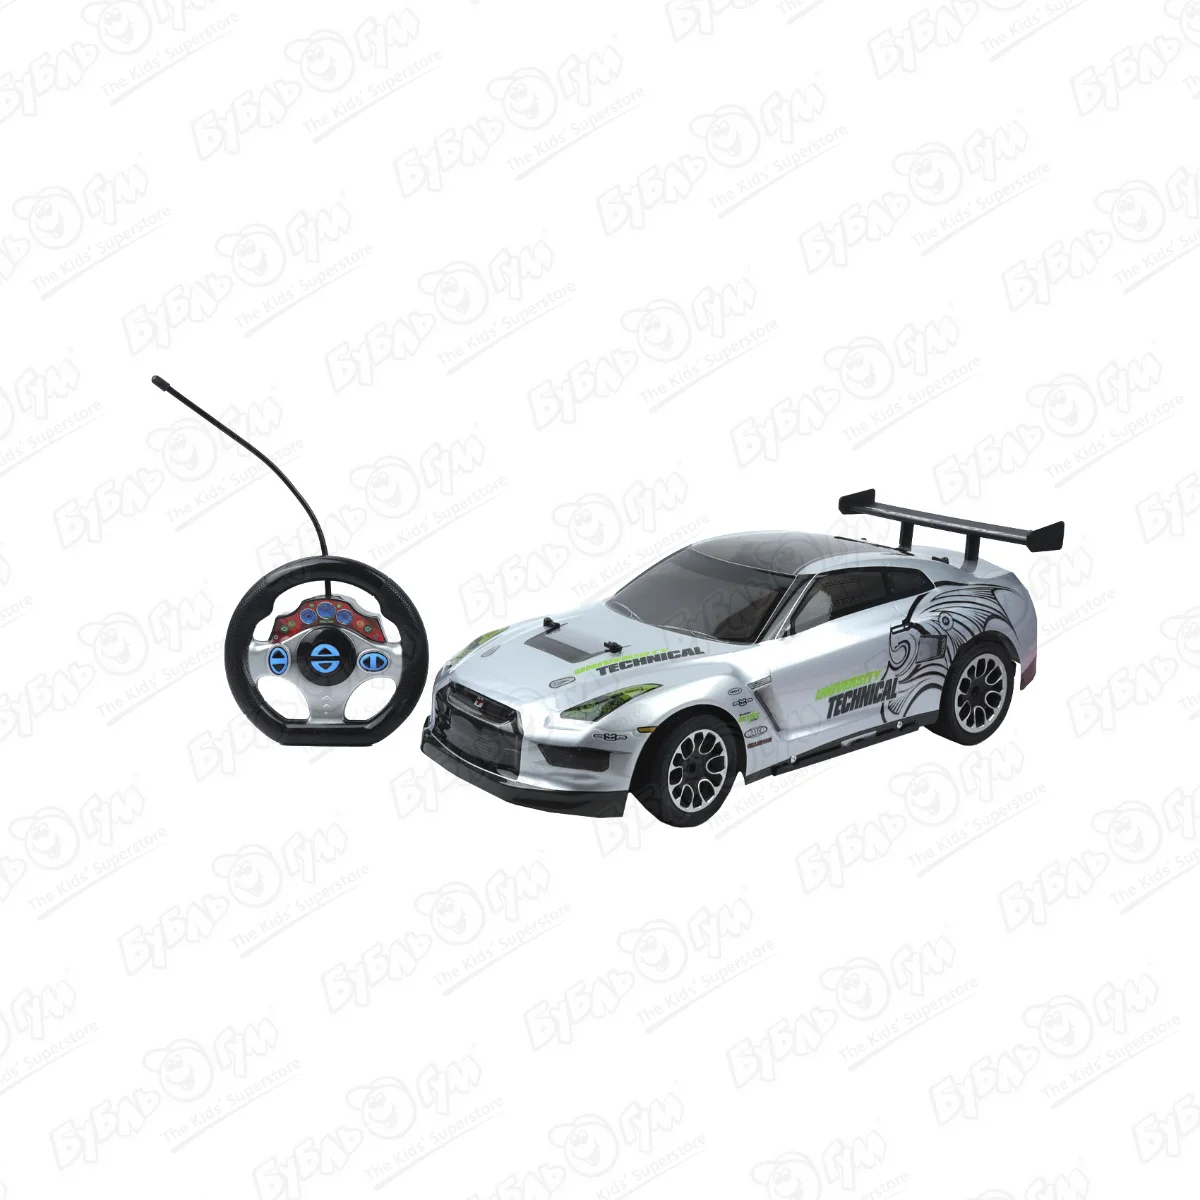 Автомобиль Nissan GT-R Lanson Toys 3D световые эффекты р/у серая 1:10